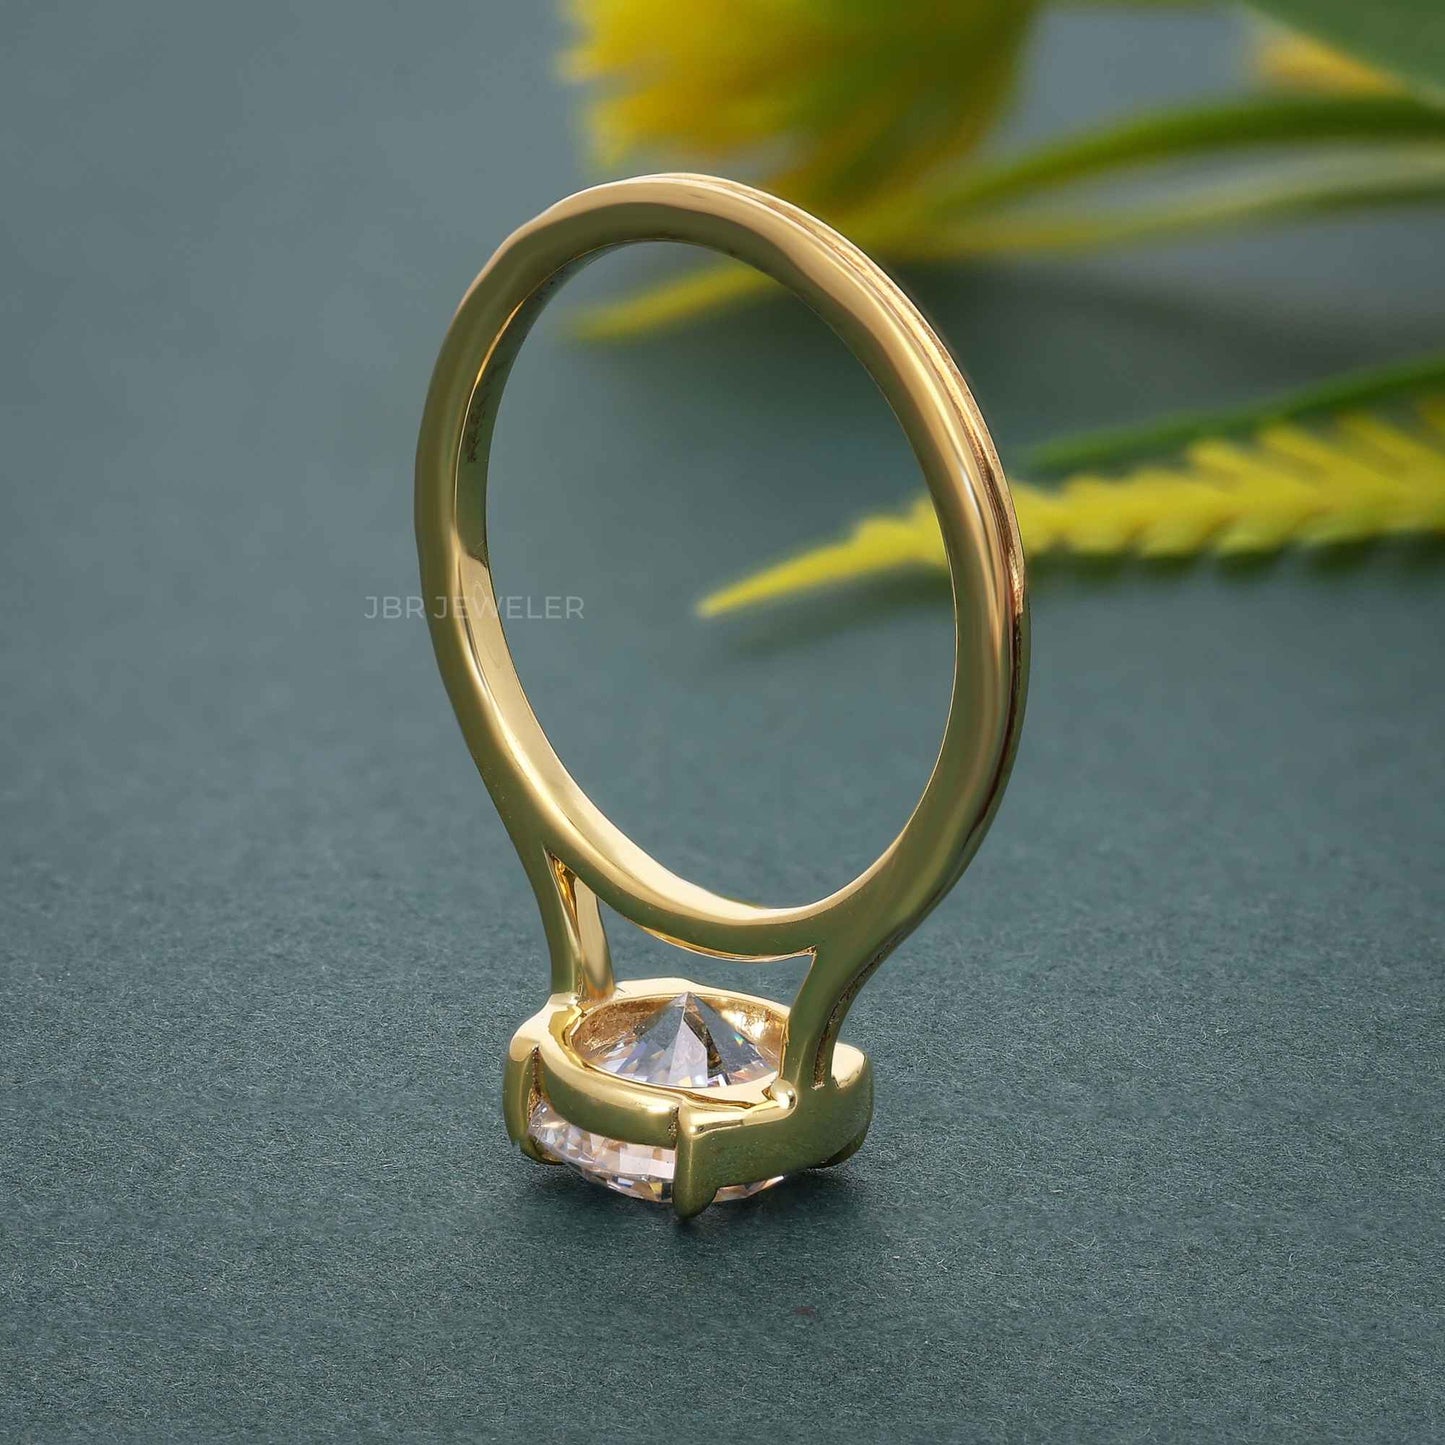 Silhouette Round Moissanite Diamond Engagement Ring